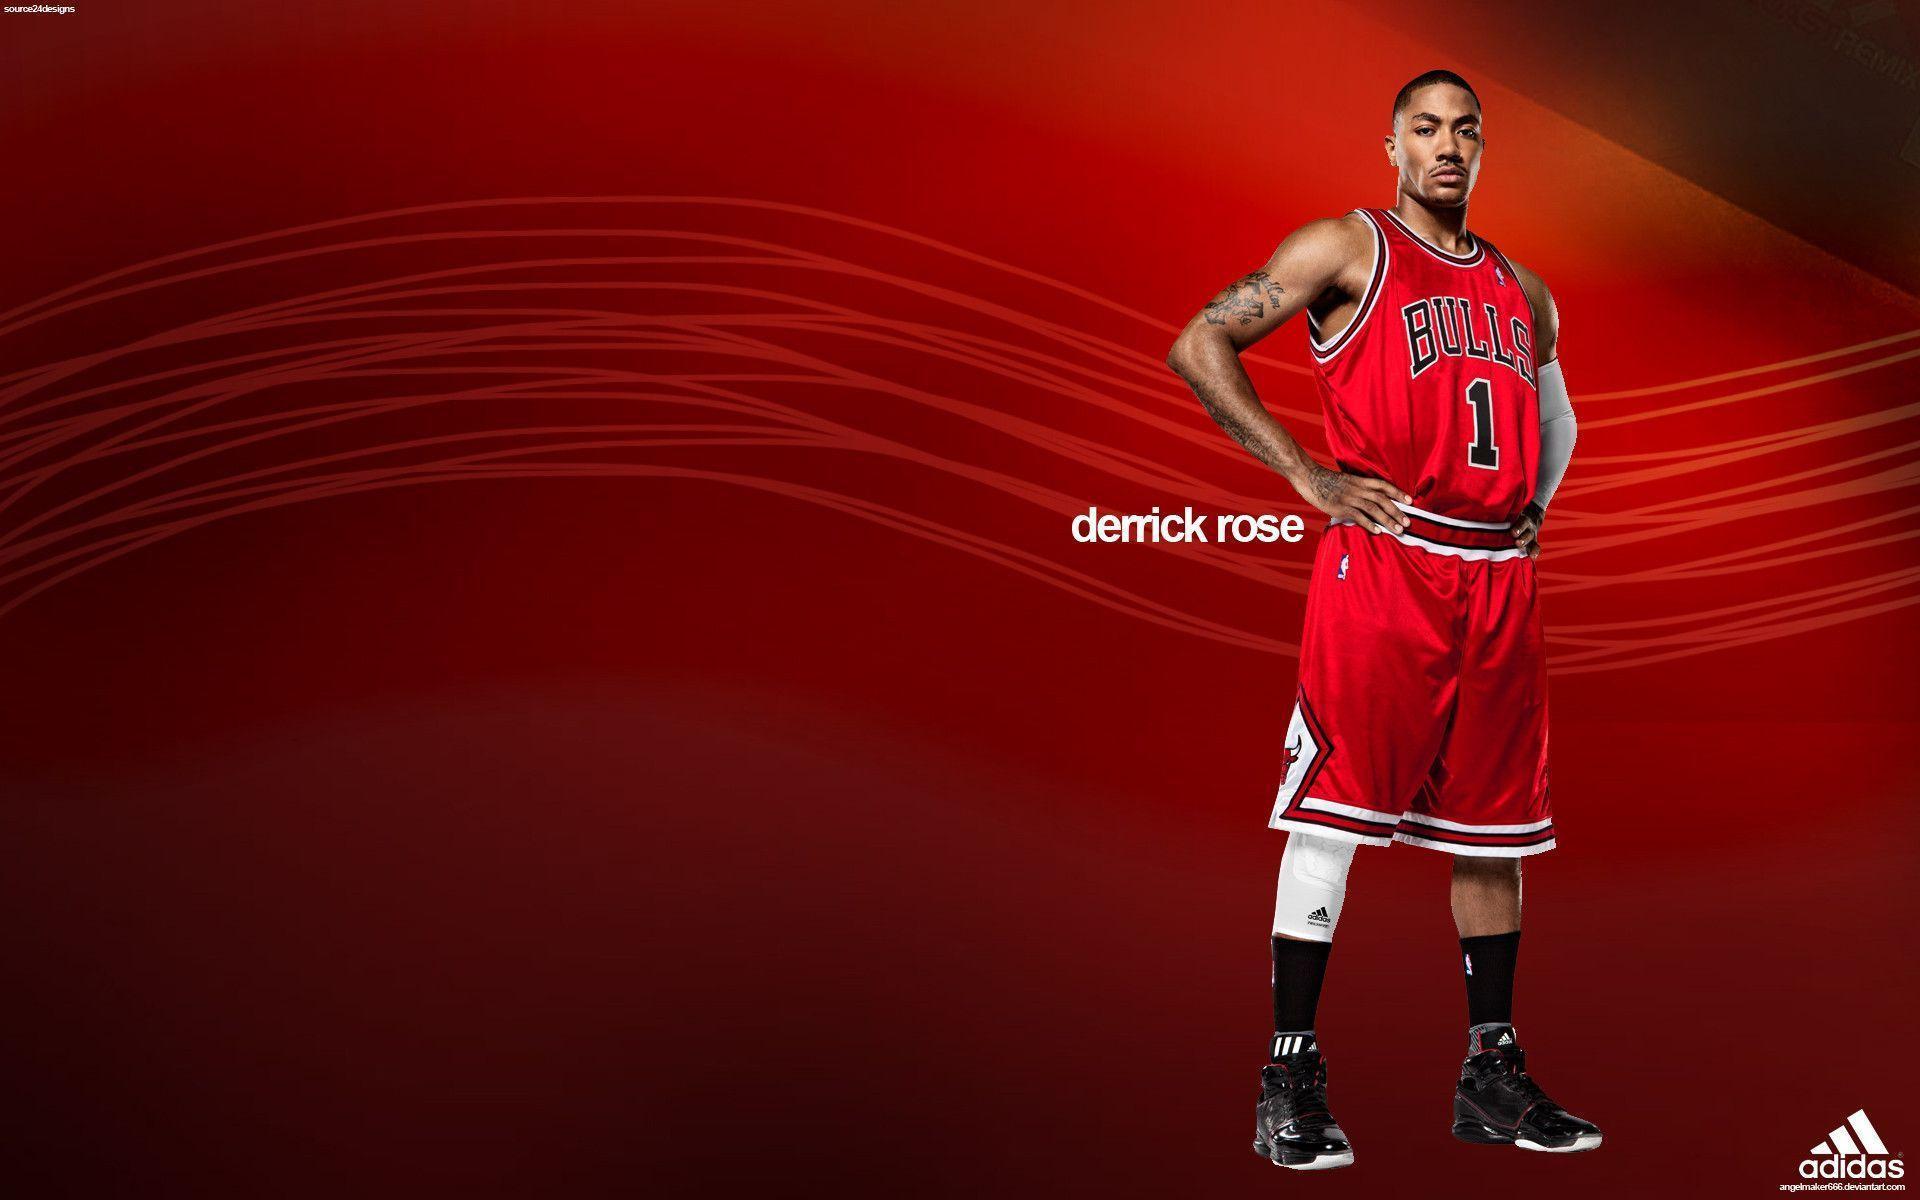 Chicago Bulls Derrick Rose 54 100196 Image HD Wallpaper. Wallfoy.com